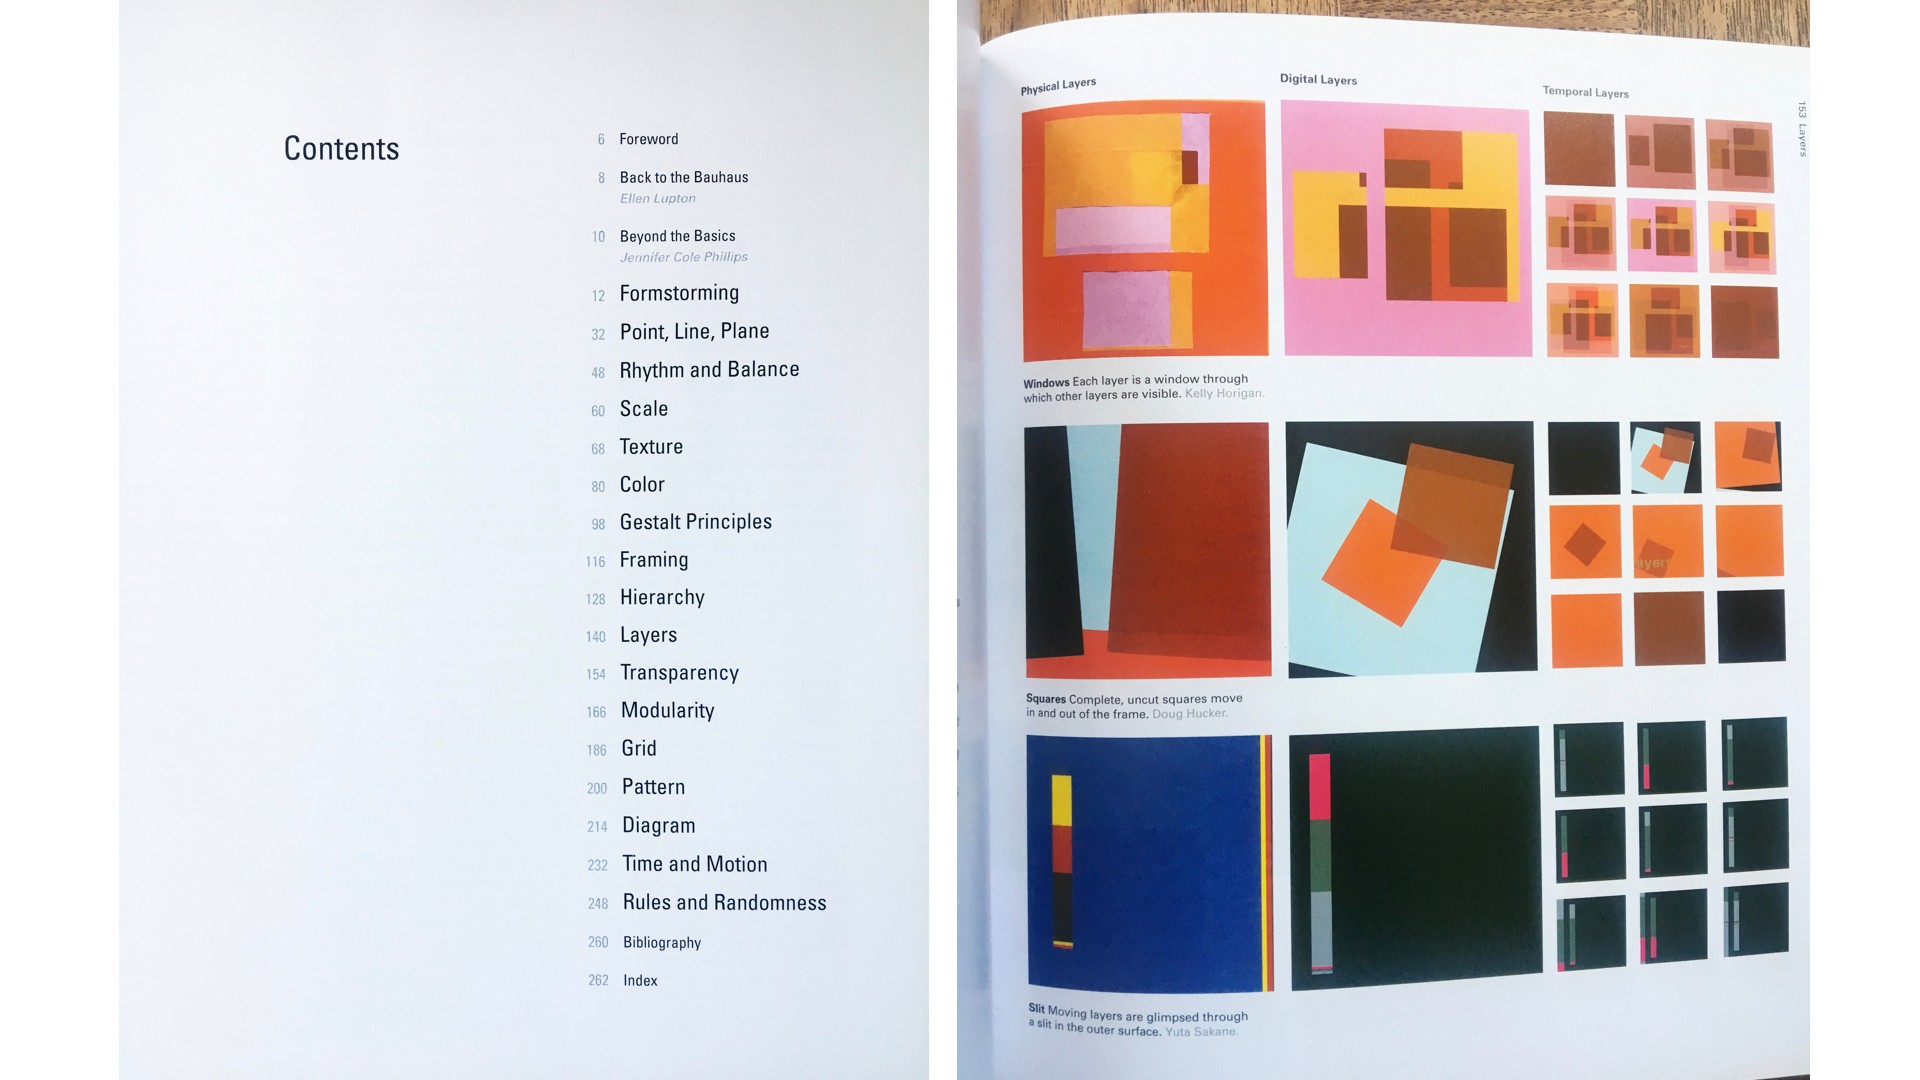 Index of book 'Graphic Design: The New Basics'.